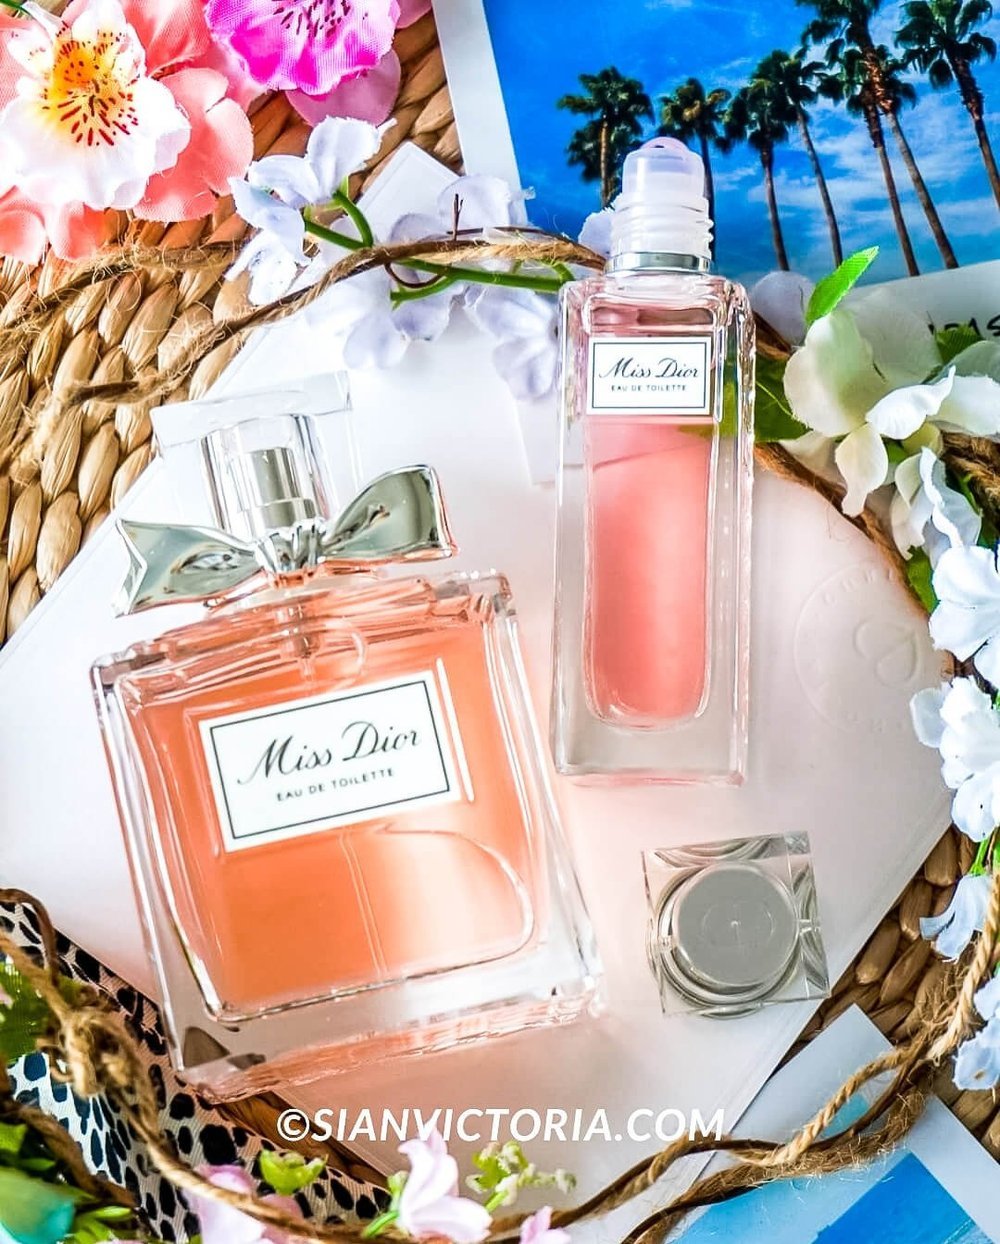 The prettiest fragrance bottles for gifting